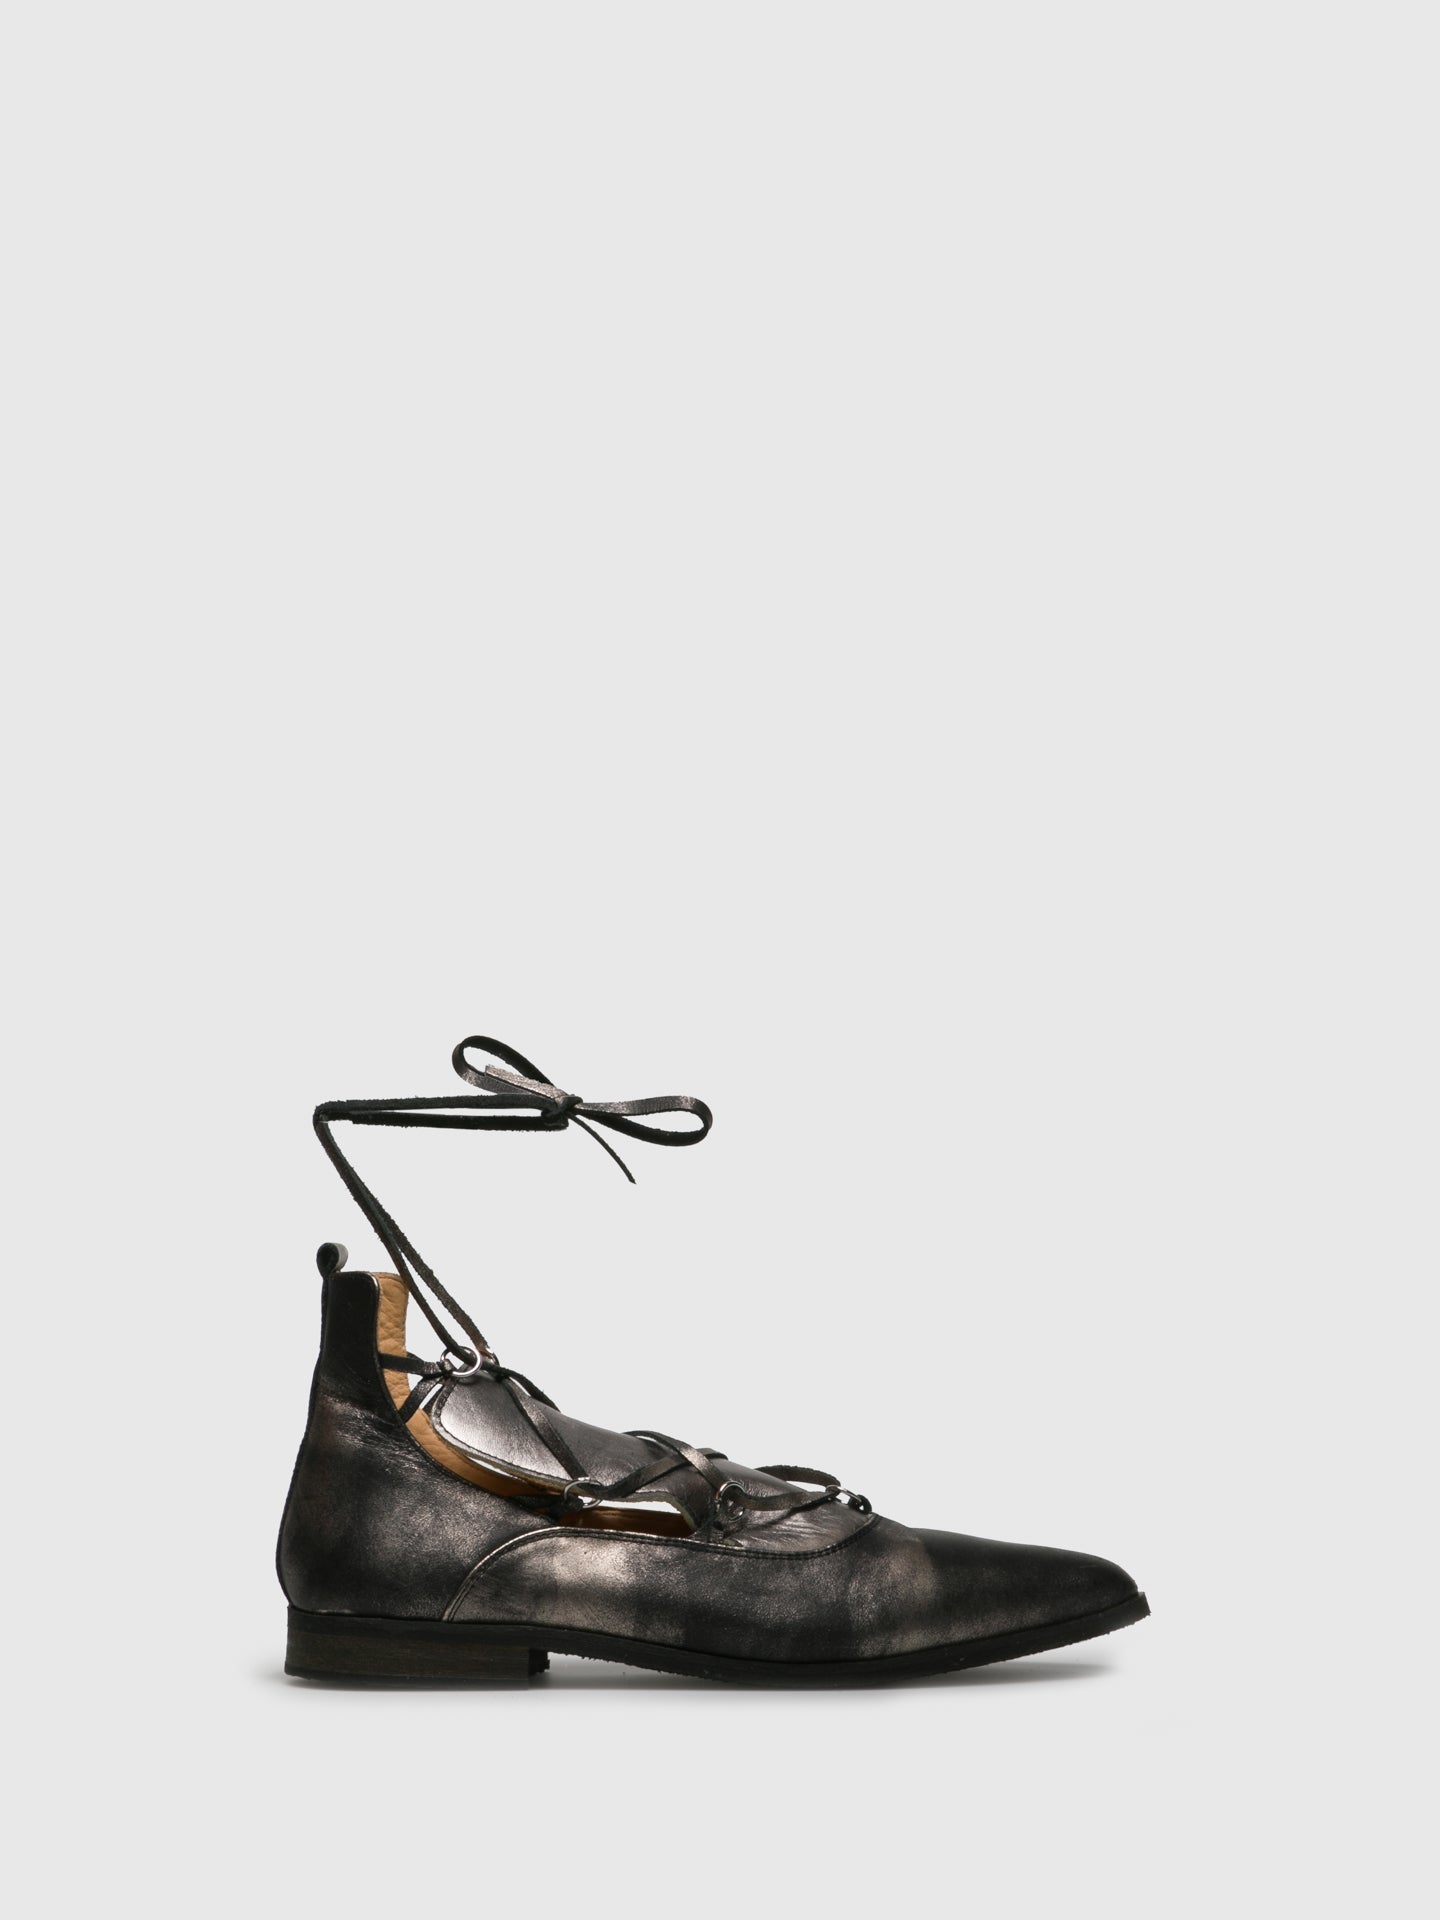 Marita Moreno Silver Black Pointed Toe Shoes